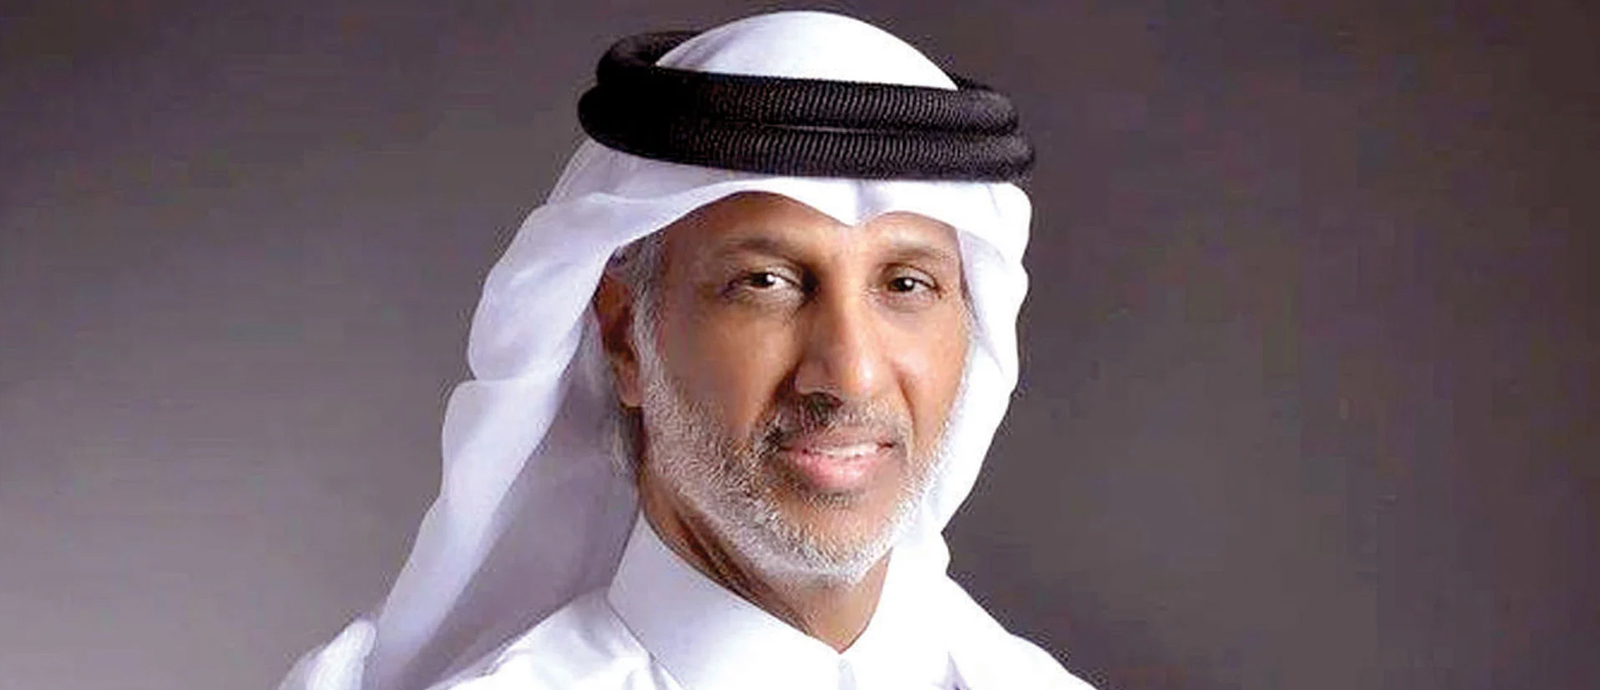 HE Sheikh Hamad Bin Khalifa Bin Ahmed Al-Thani